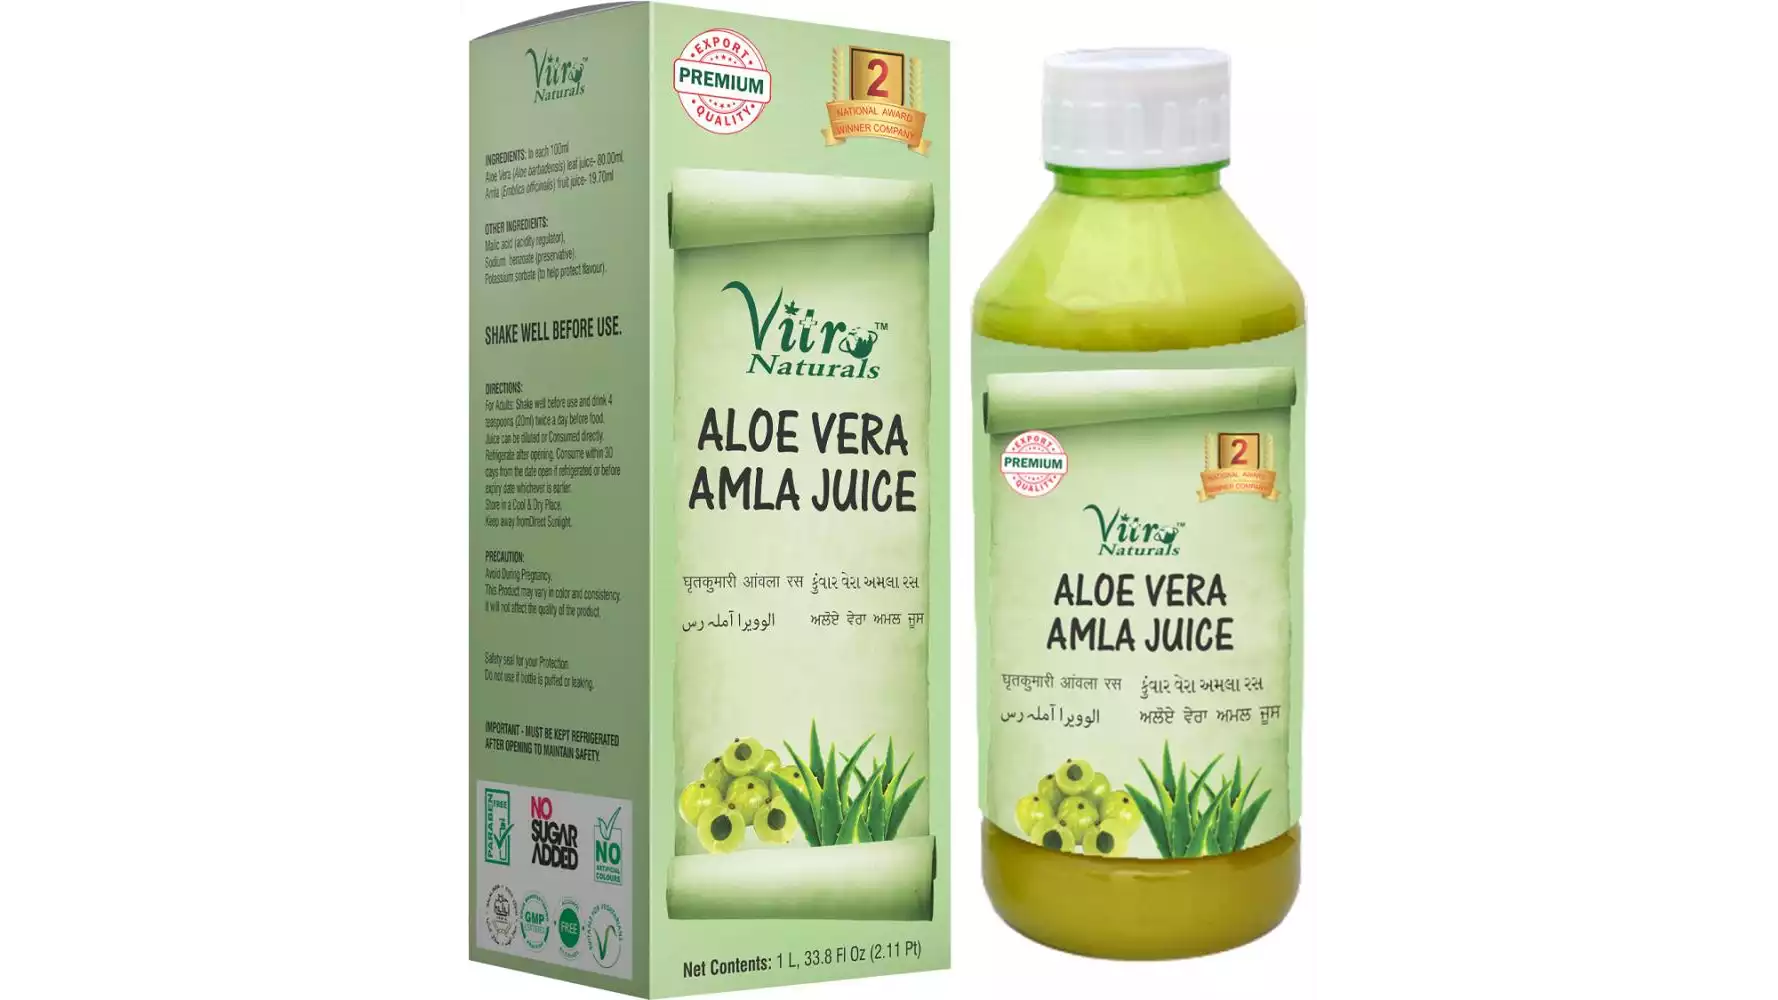 Vitro Naturals Aloe Vera Amla Juice (1liter)